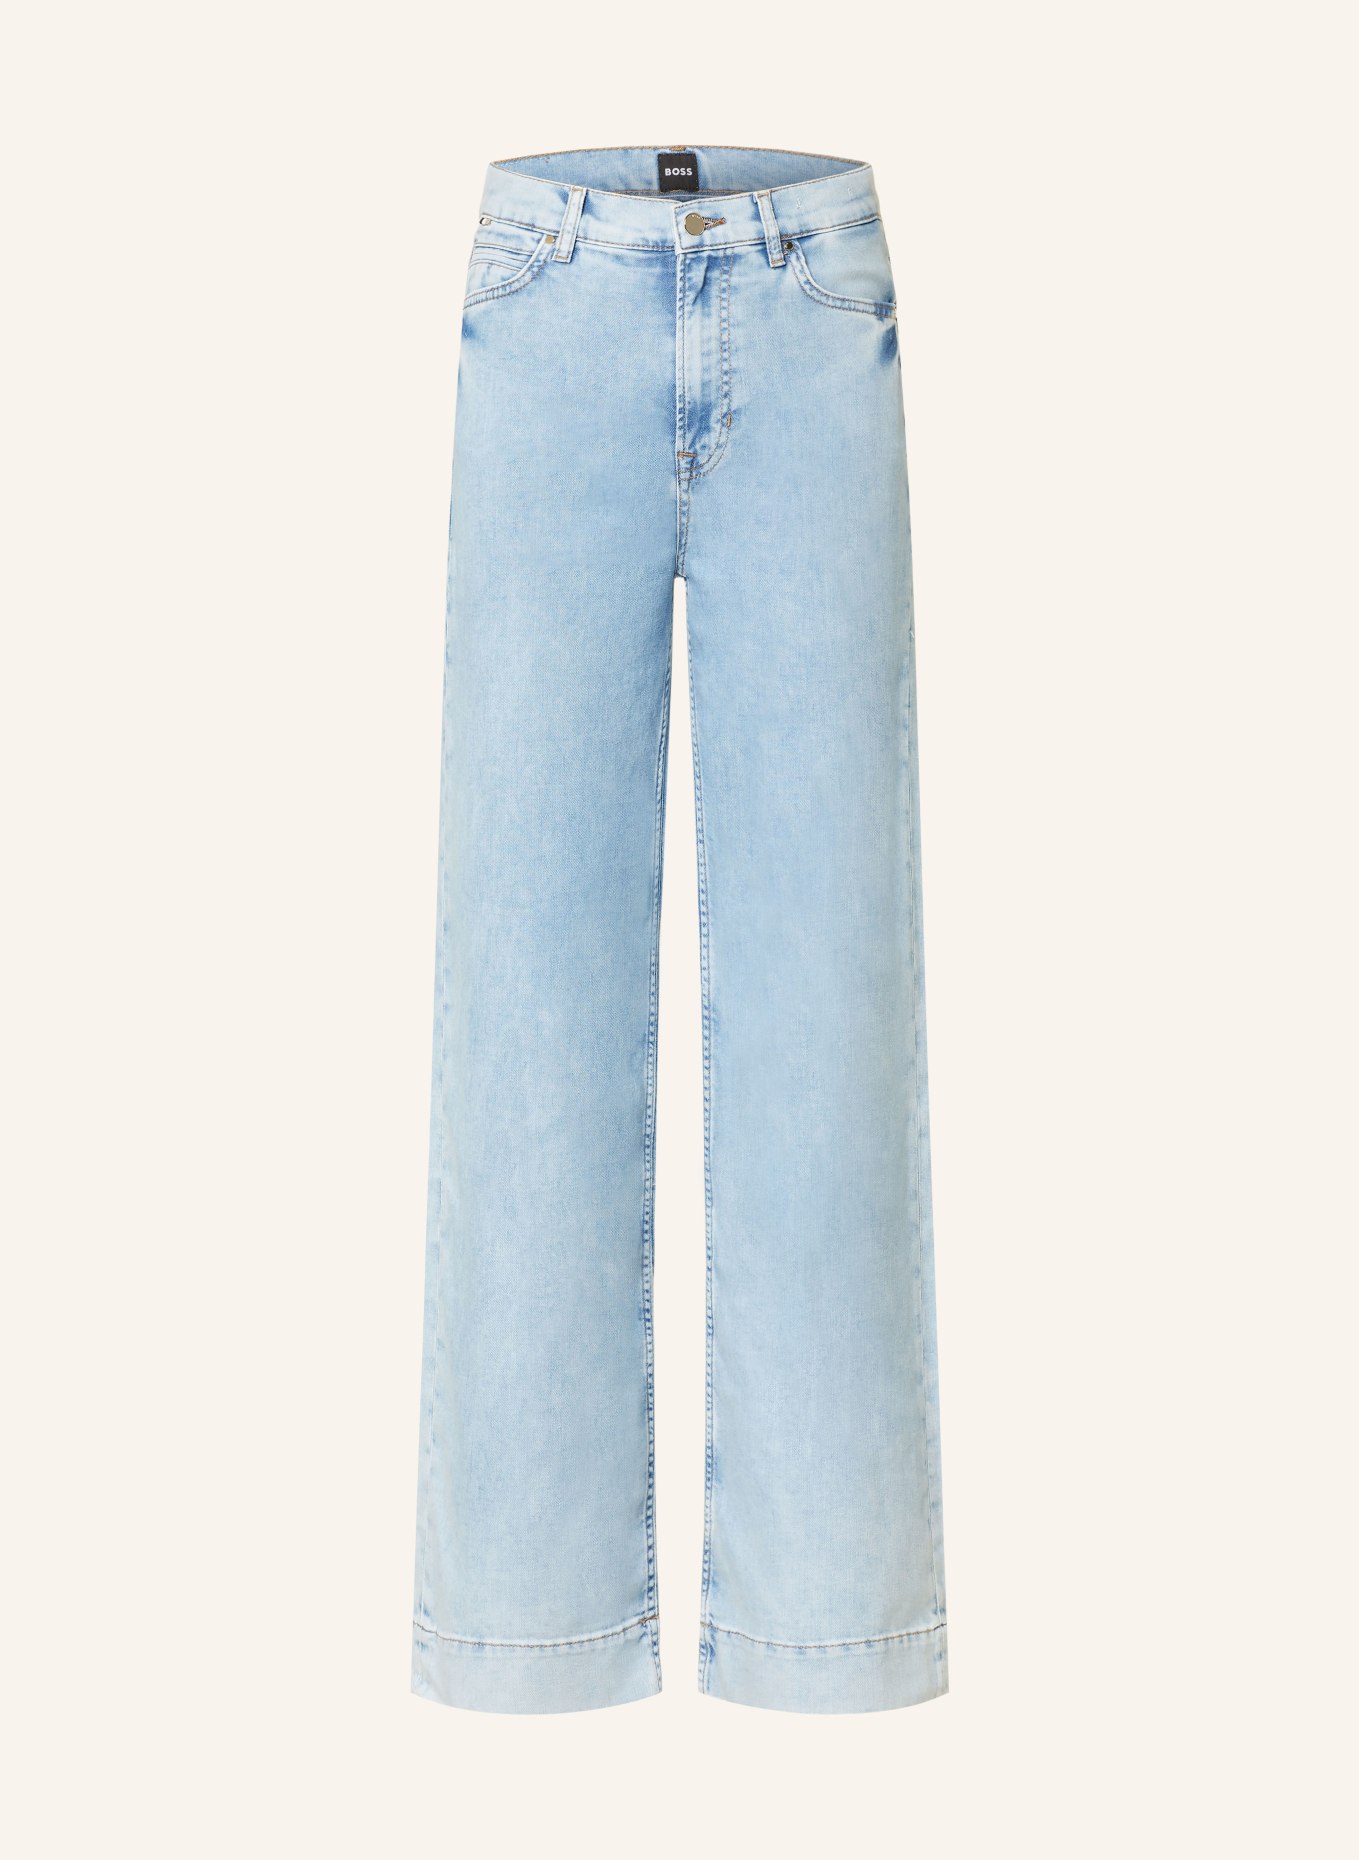 BOSS Jeans MARLENE HR 3.0, Farbe: 444 TURQUOISE/AQUA (Bild 1)